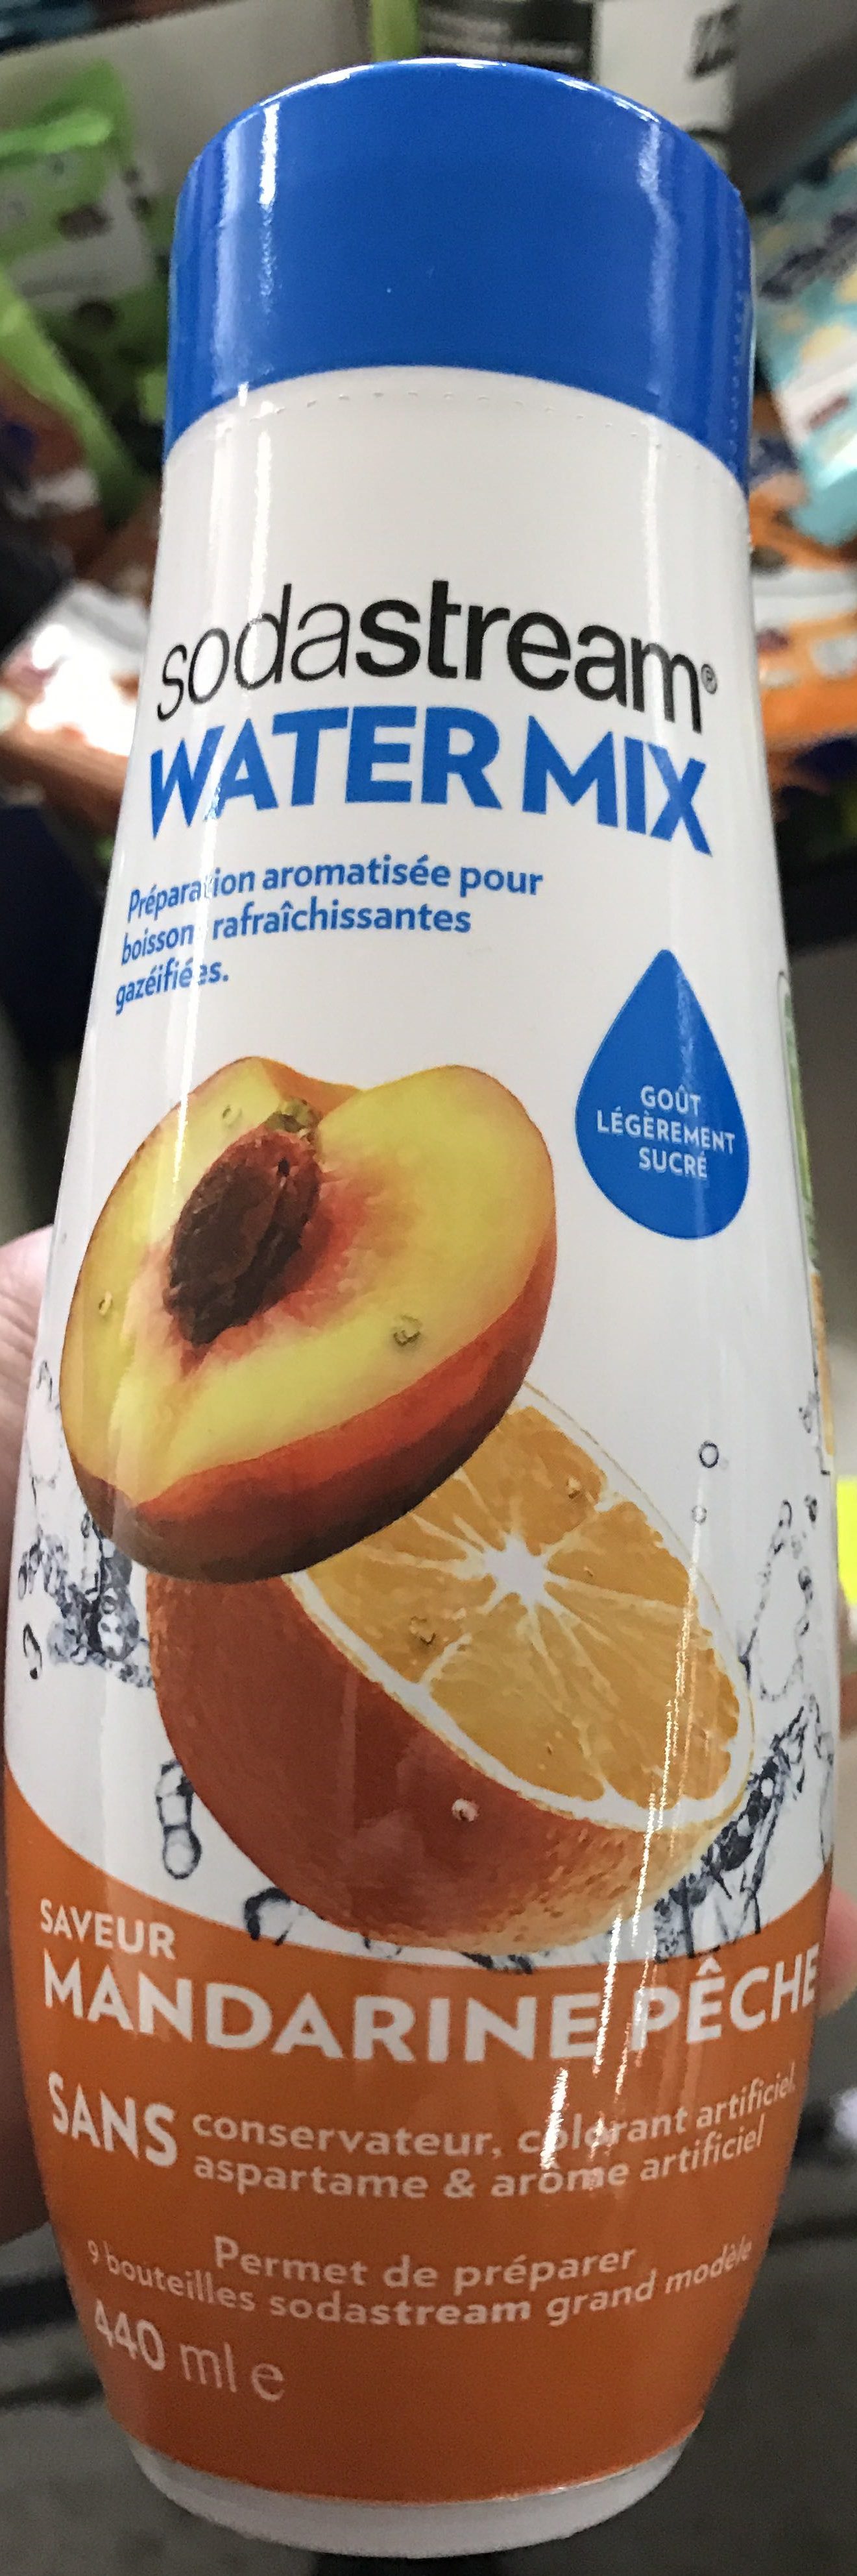 Water Mix saveur Mandarine Pêche - Produit